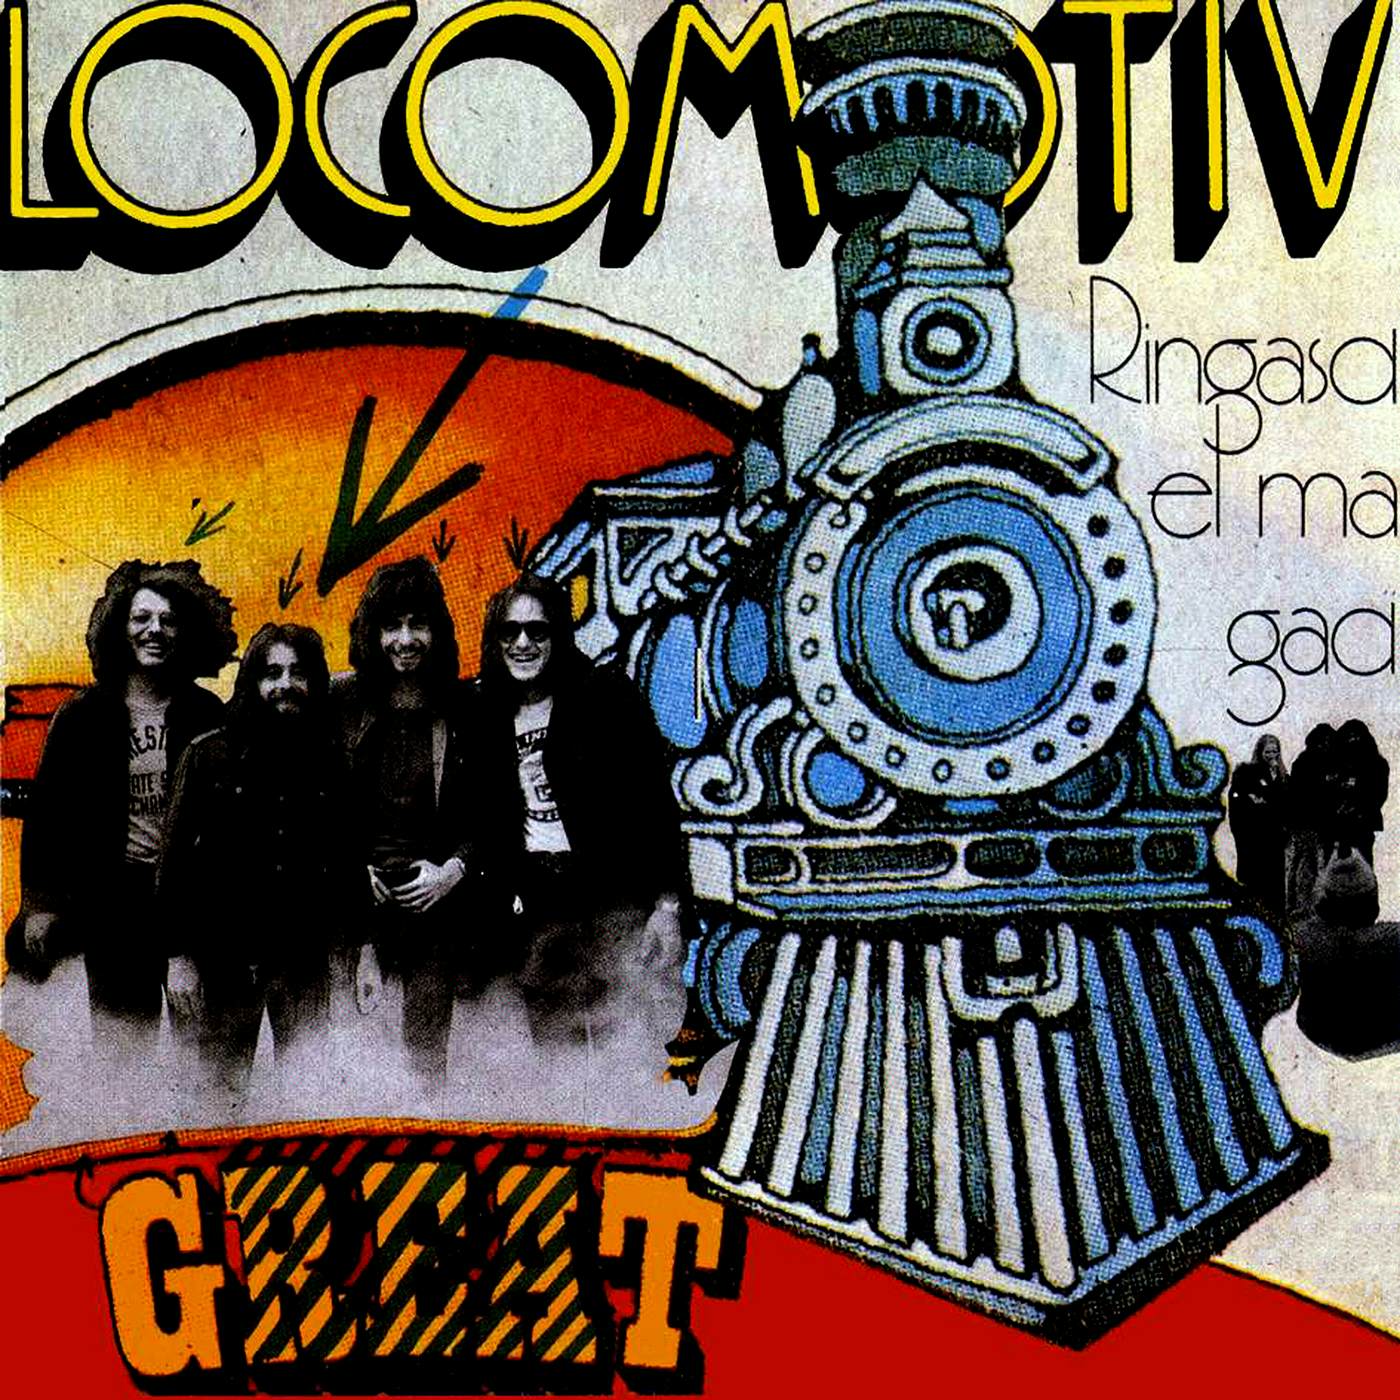 LOCOMOTIV GT OSSZES NAGYLEMEZE I 2 1970 RINGASD EL CD